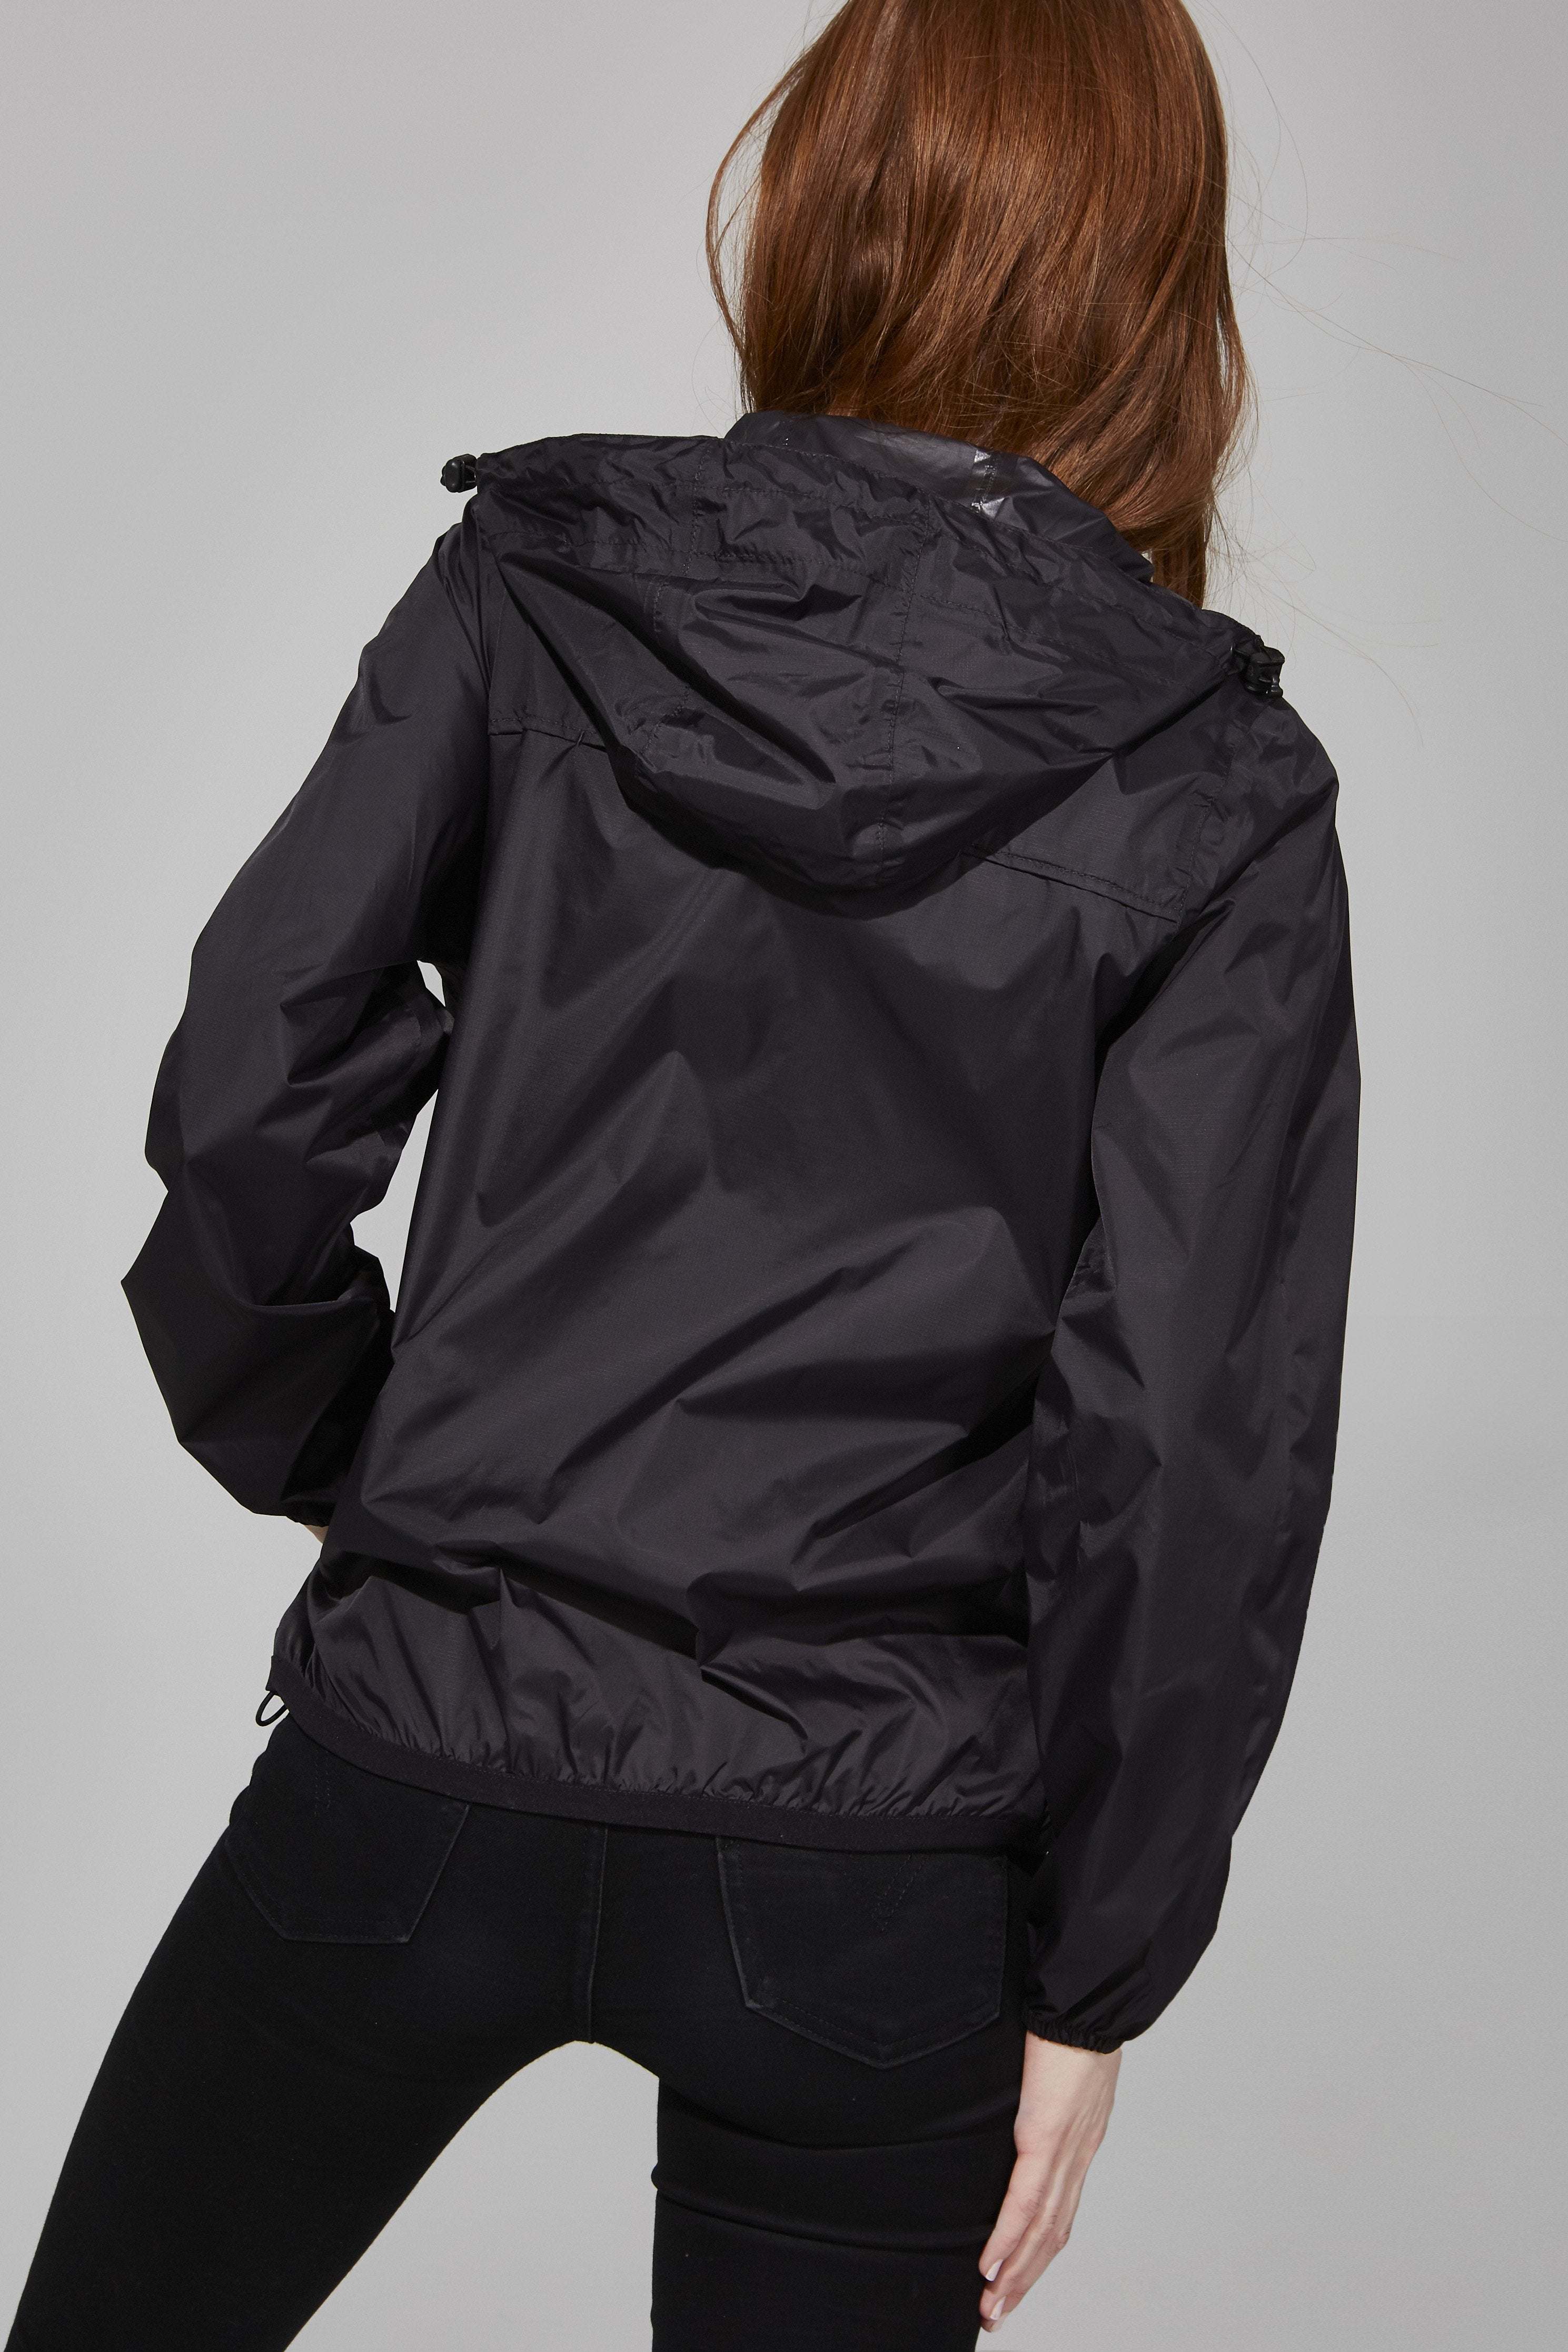 Sloane - Black Full Zip Packable Rain Jacket - O8lifestyle.